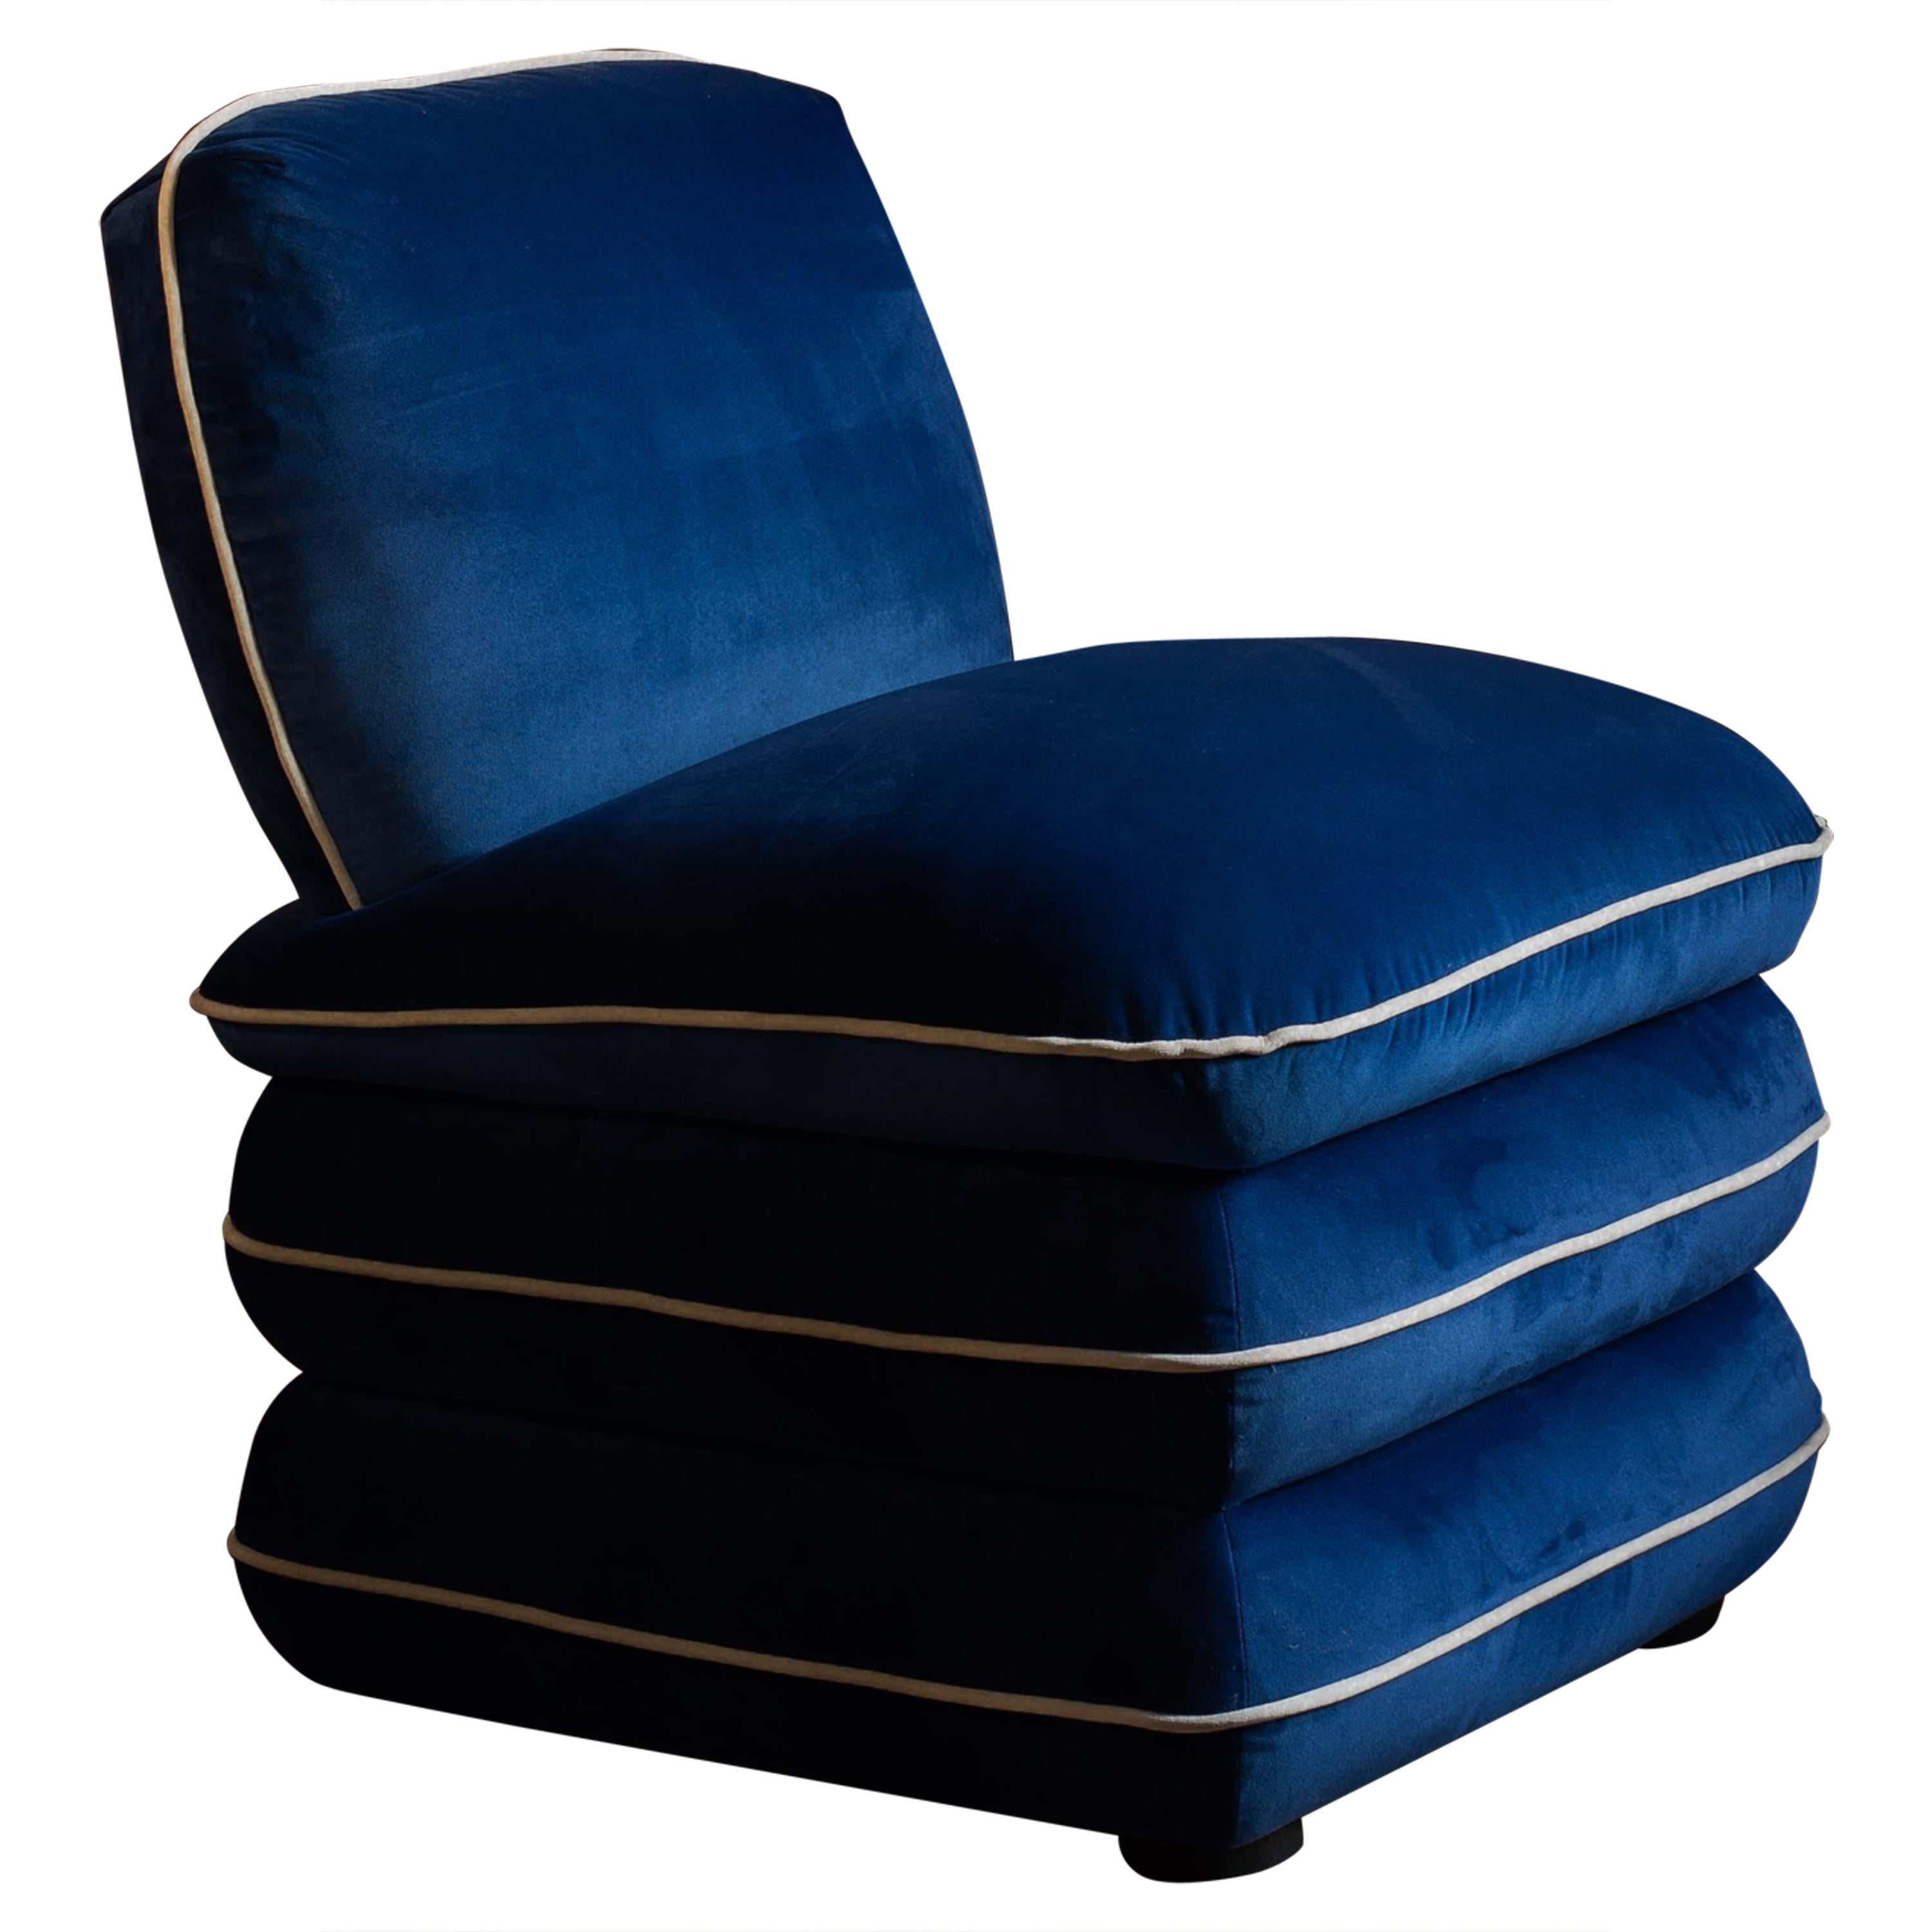 Pillow Chair by Ash - Navy Velvet For Sale